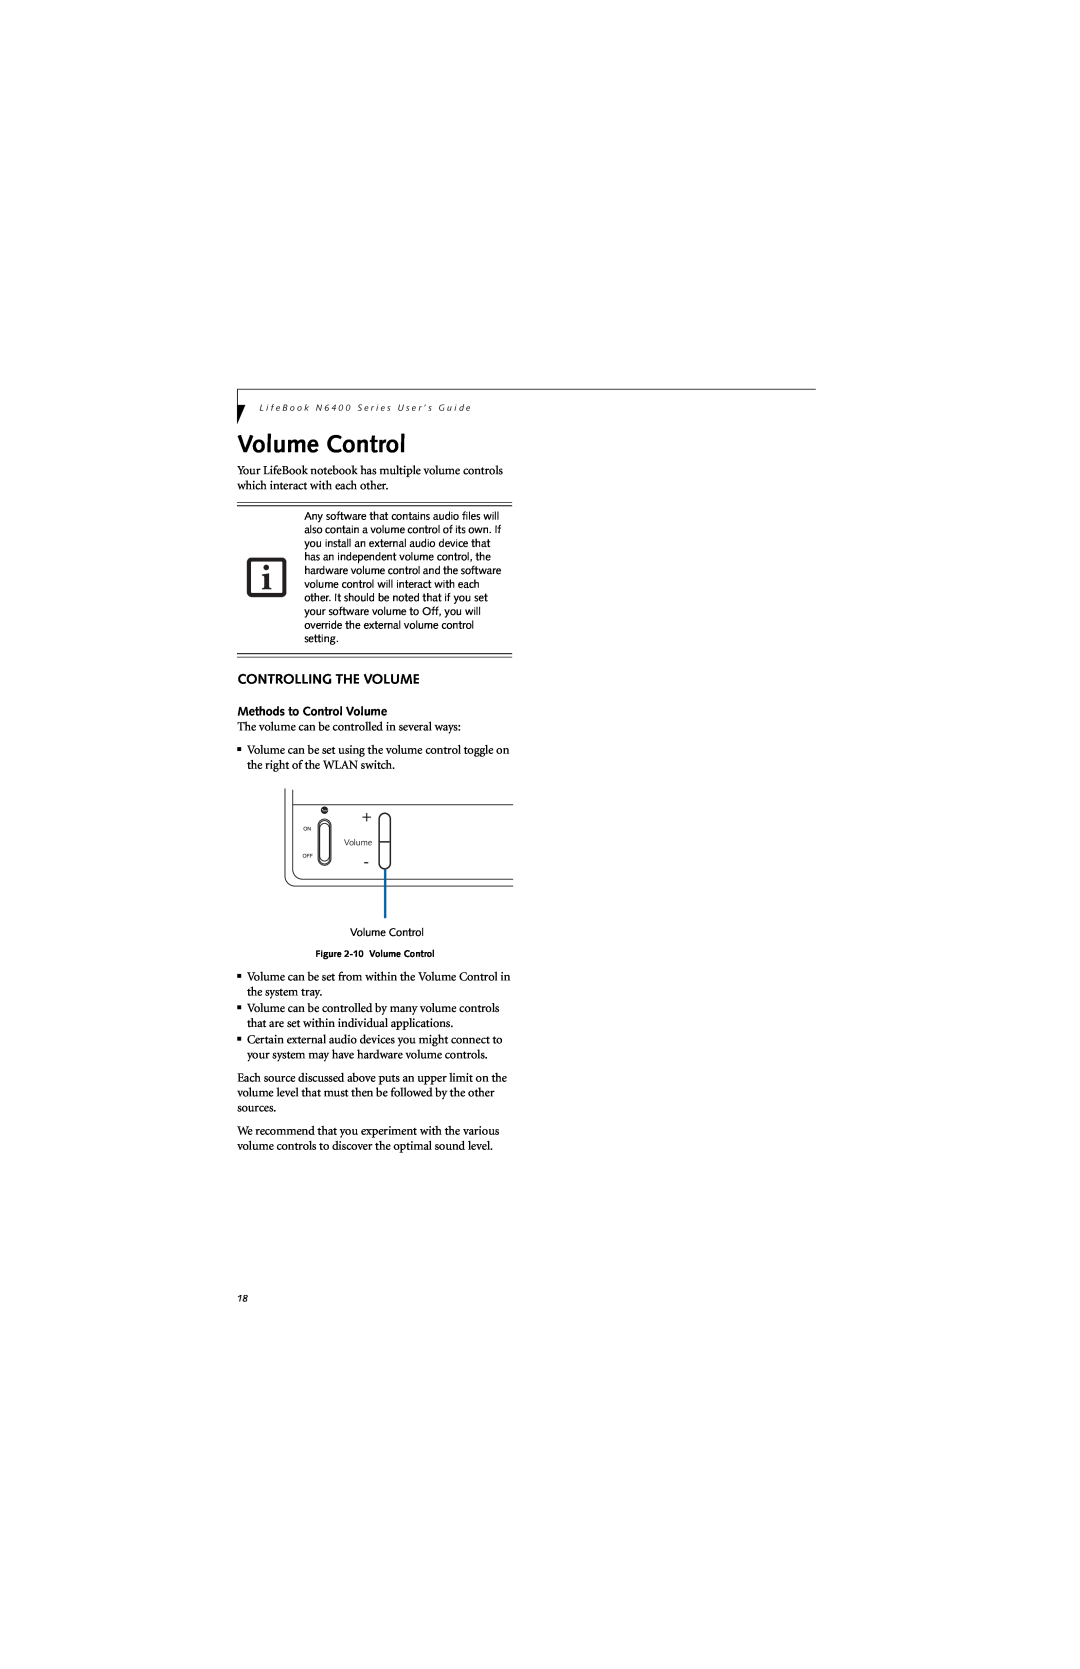 Fujitsu N6460 manual Volume Control, Controlling The Volume, Methods to Control Volume 